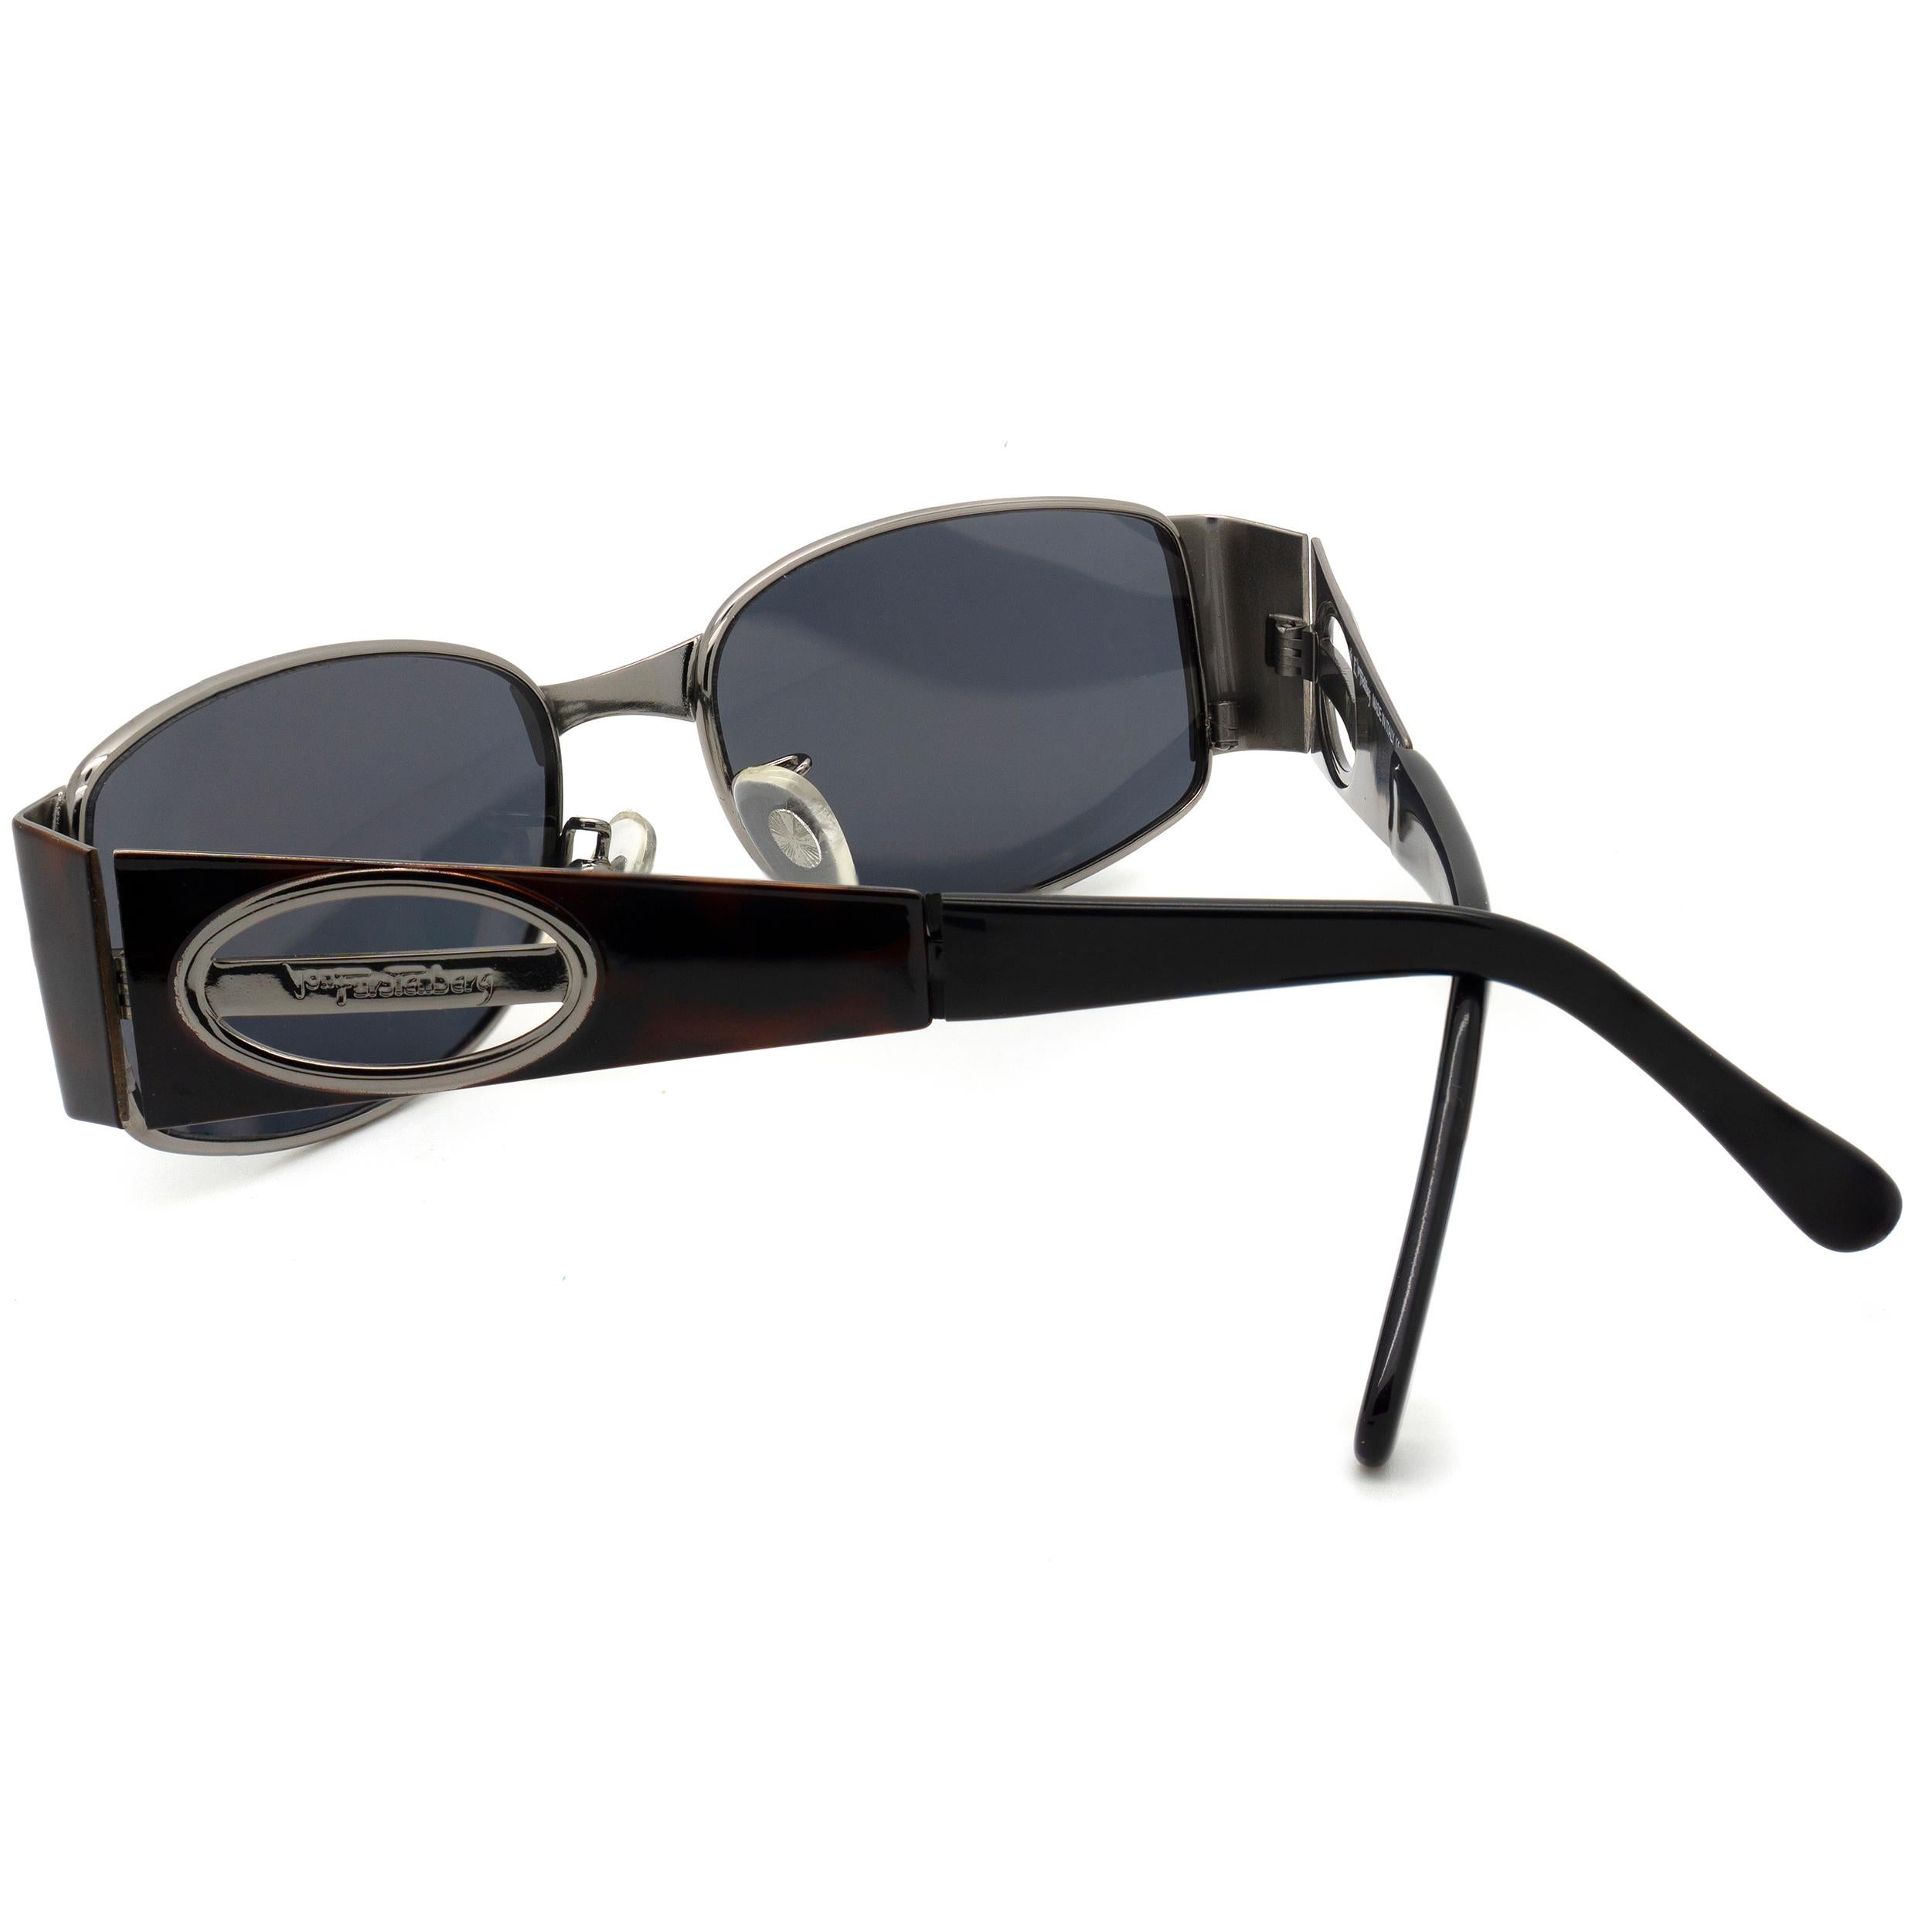 Prince Egon von Furstenberg vintage sunglasses, Italy 80s In New Condition For Sale In Santa Clarita, CA